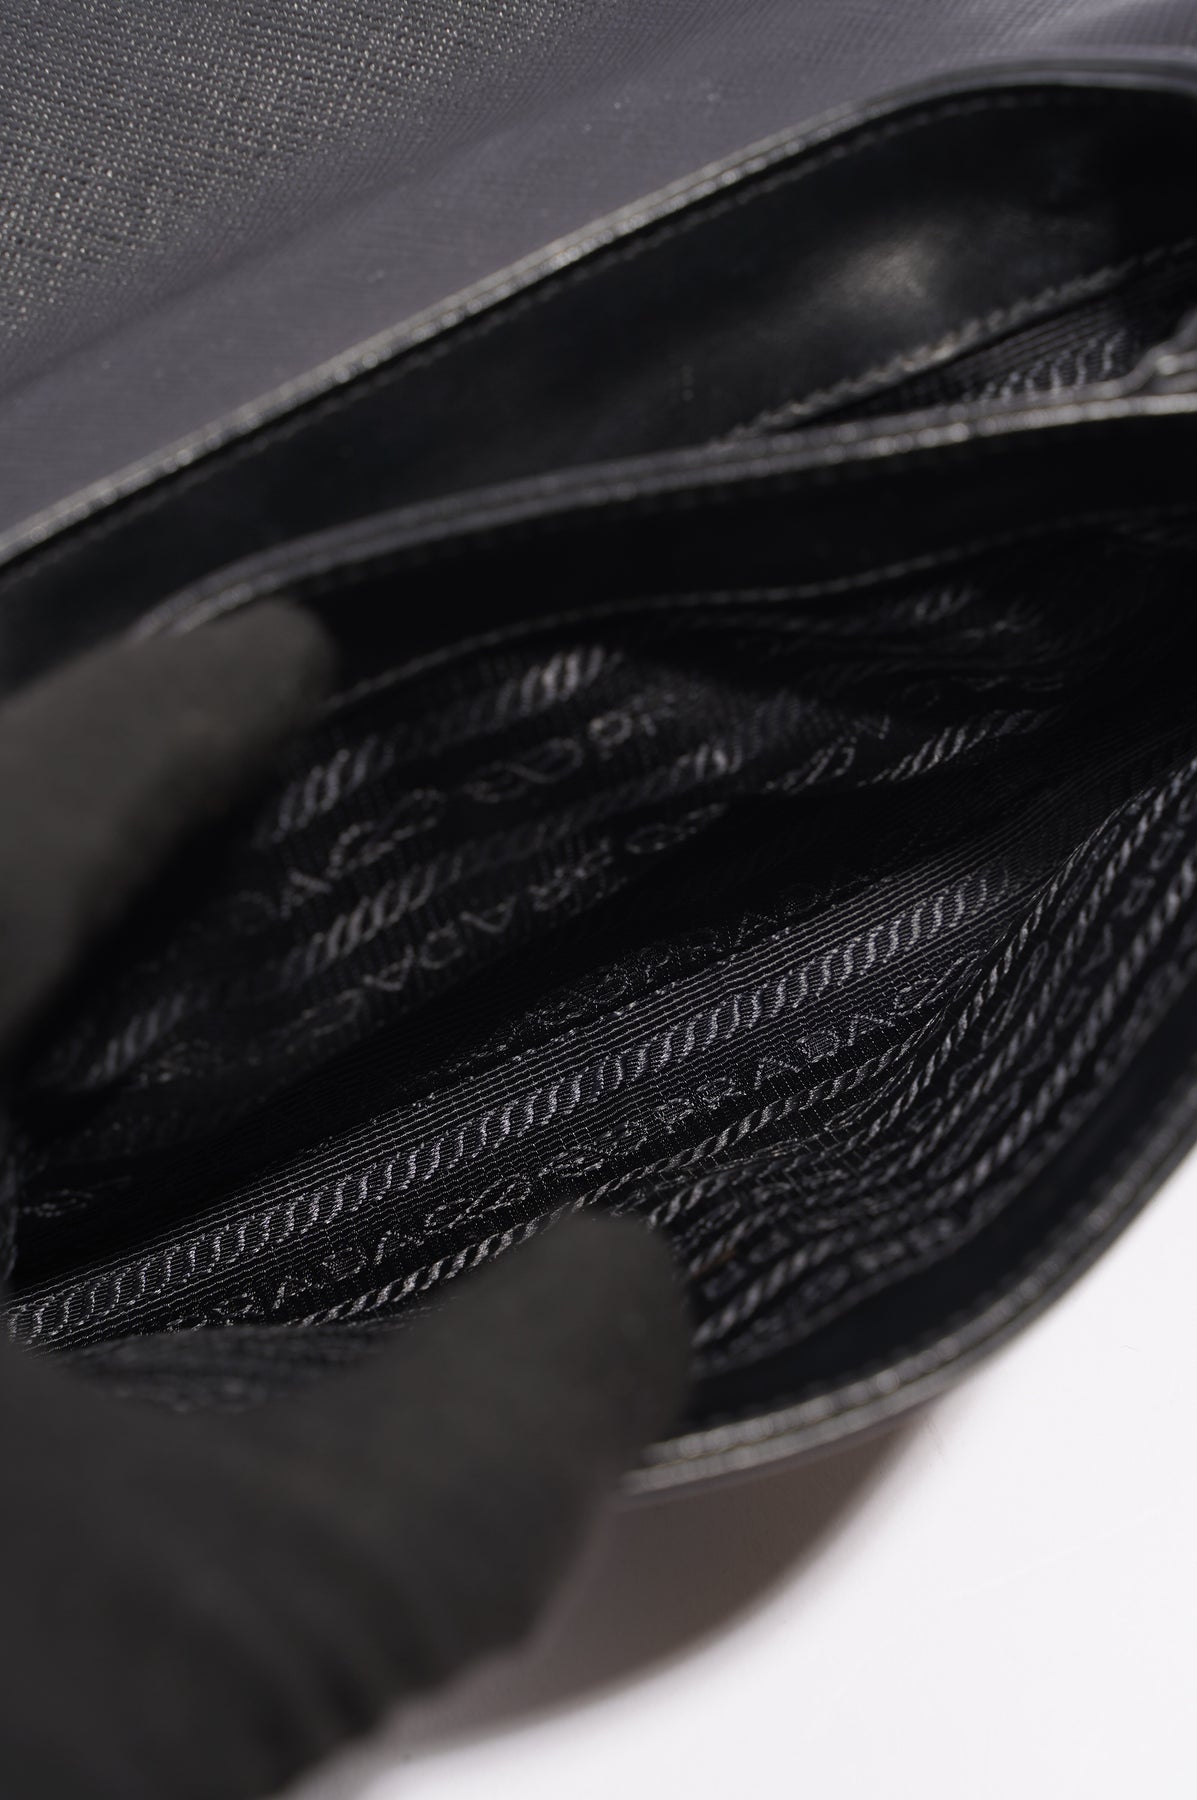 Prada, Bags, Prada Chain Crossbody 2way Black Leather Bd35 New